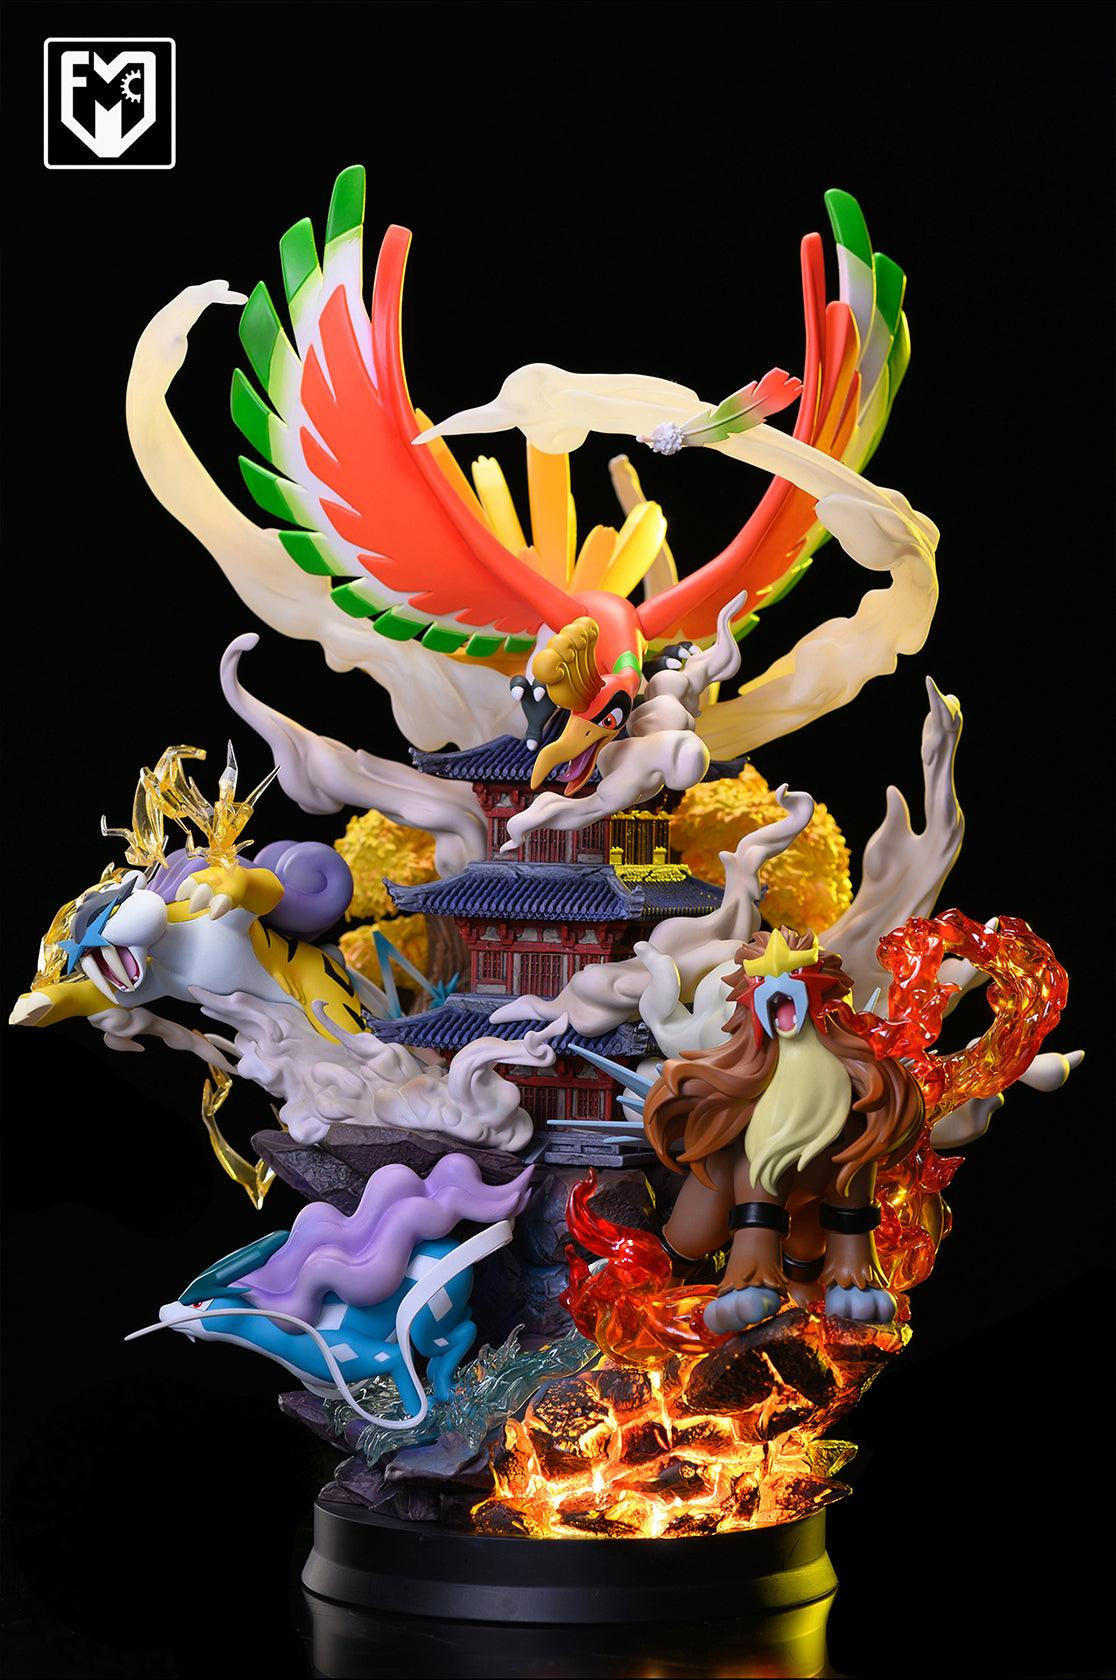 Pokémon Burning Legend #2 Resin Statue - MFC Studio [In-Stock]